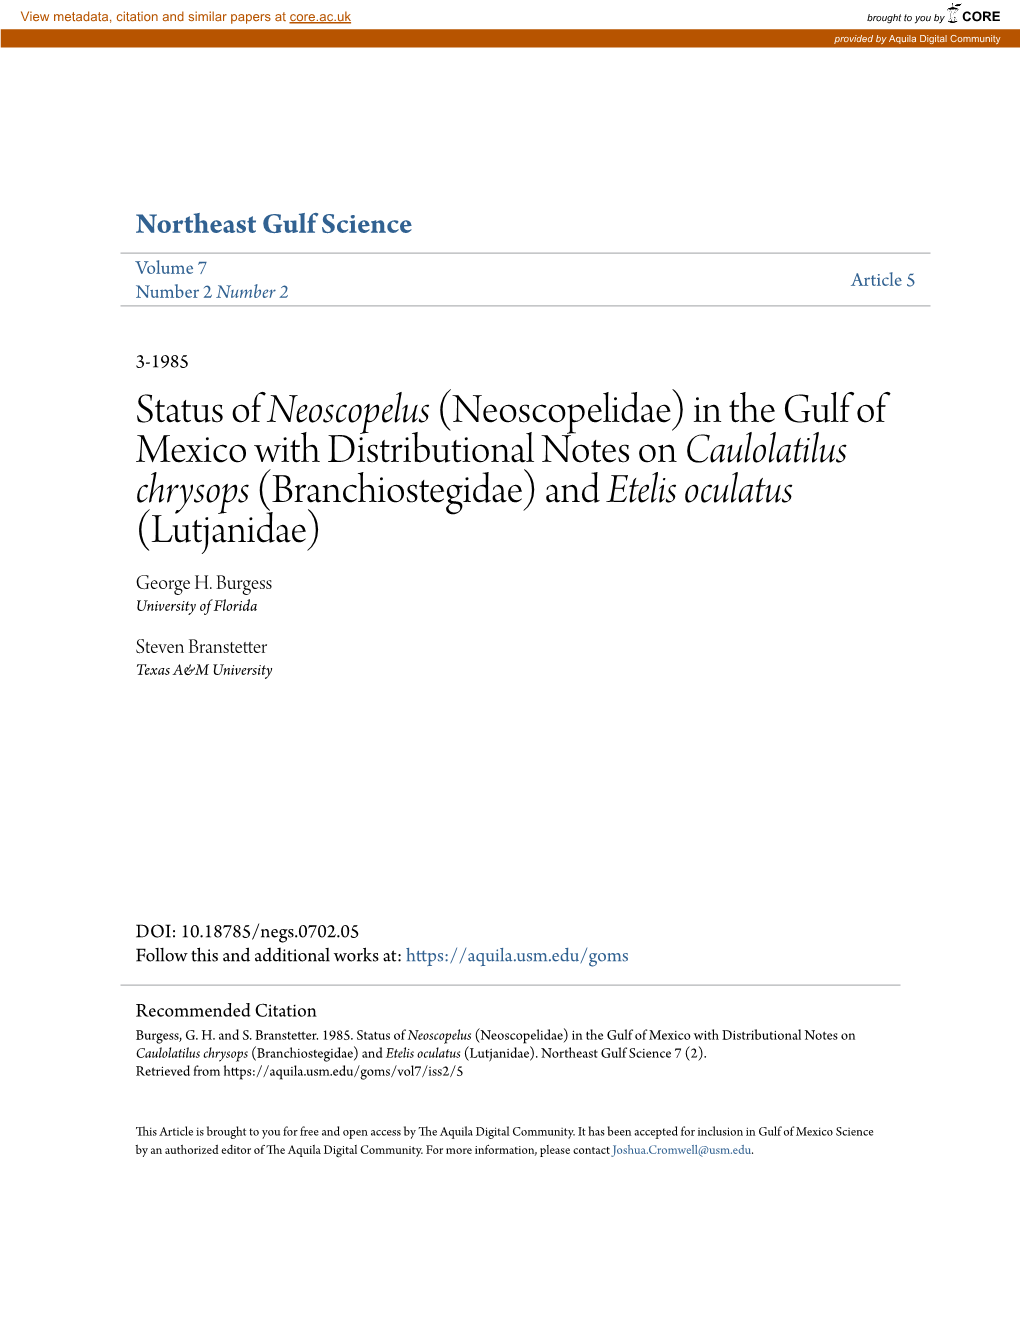 Status of Neoscopelus (Neoscopelidae) in the Gulf of Mexico with Distributional Notes on Caulolatilus Chrysops (Branchiostegidae